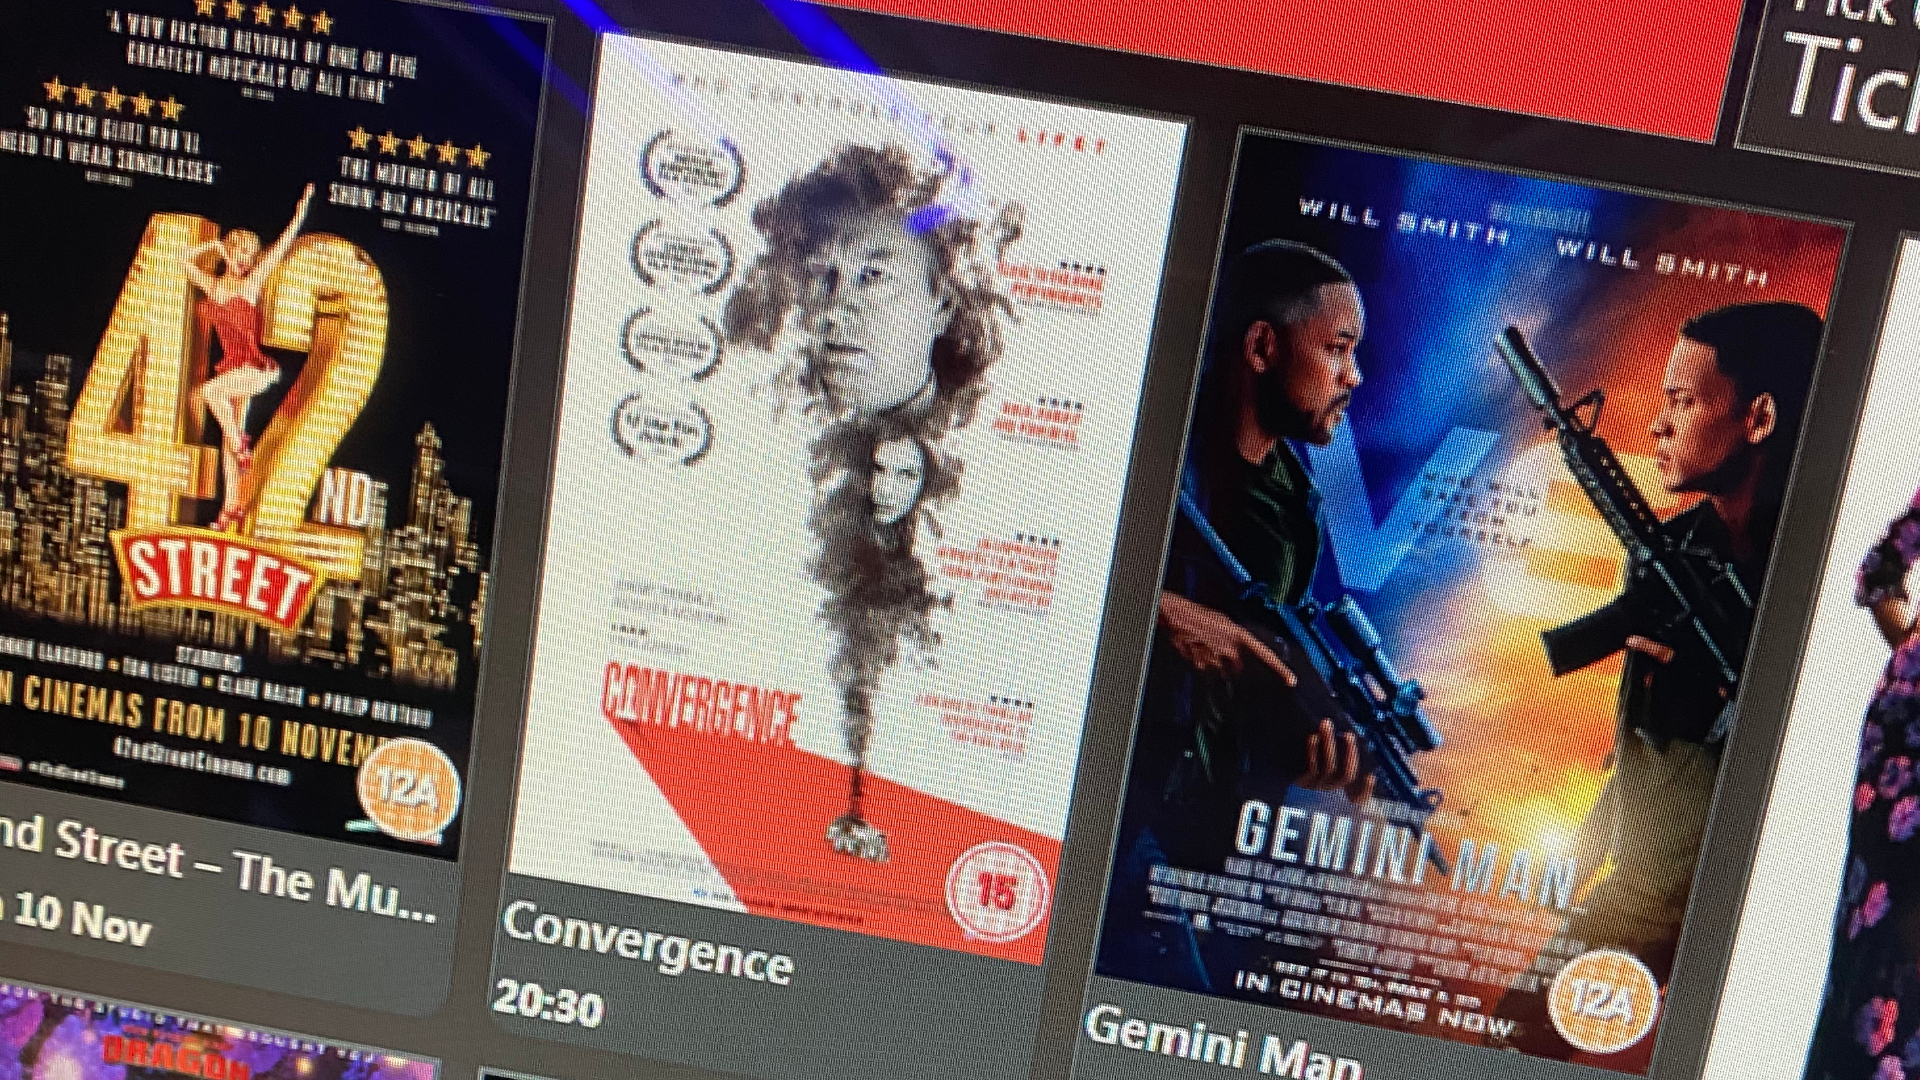 Convergence Cineworld